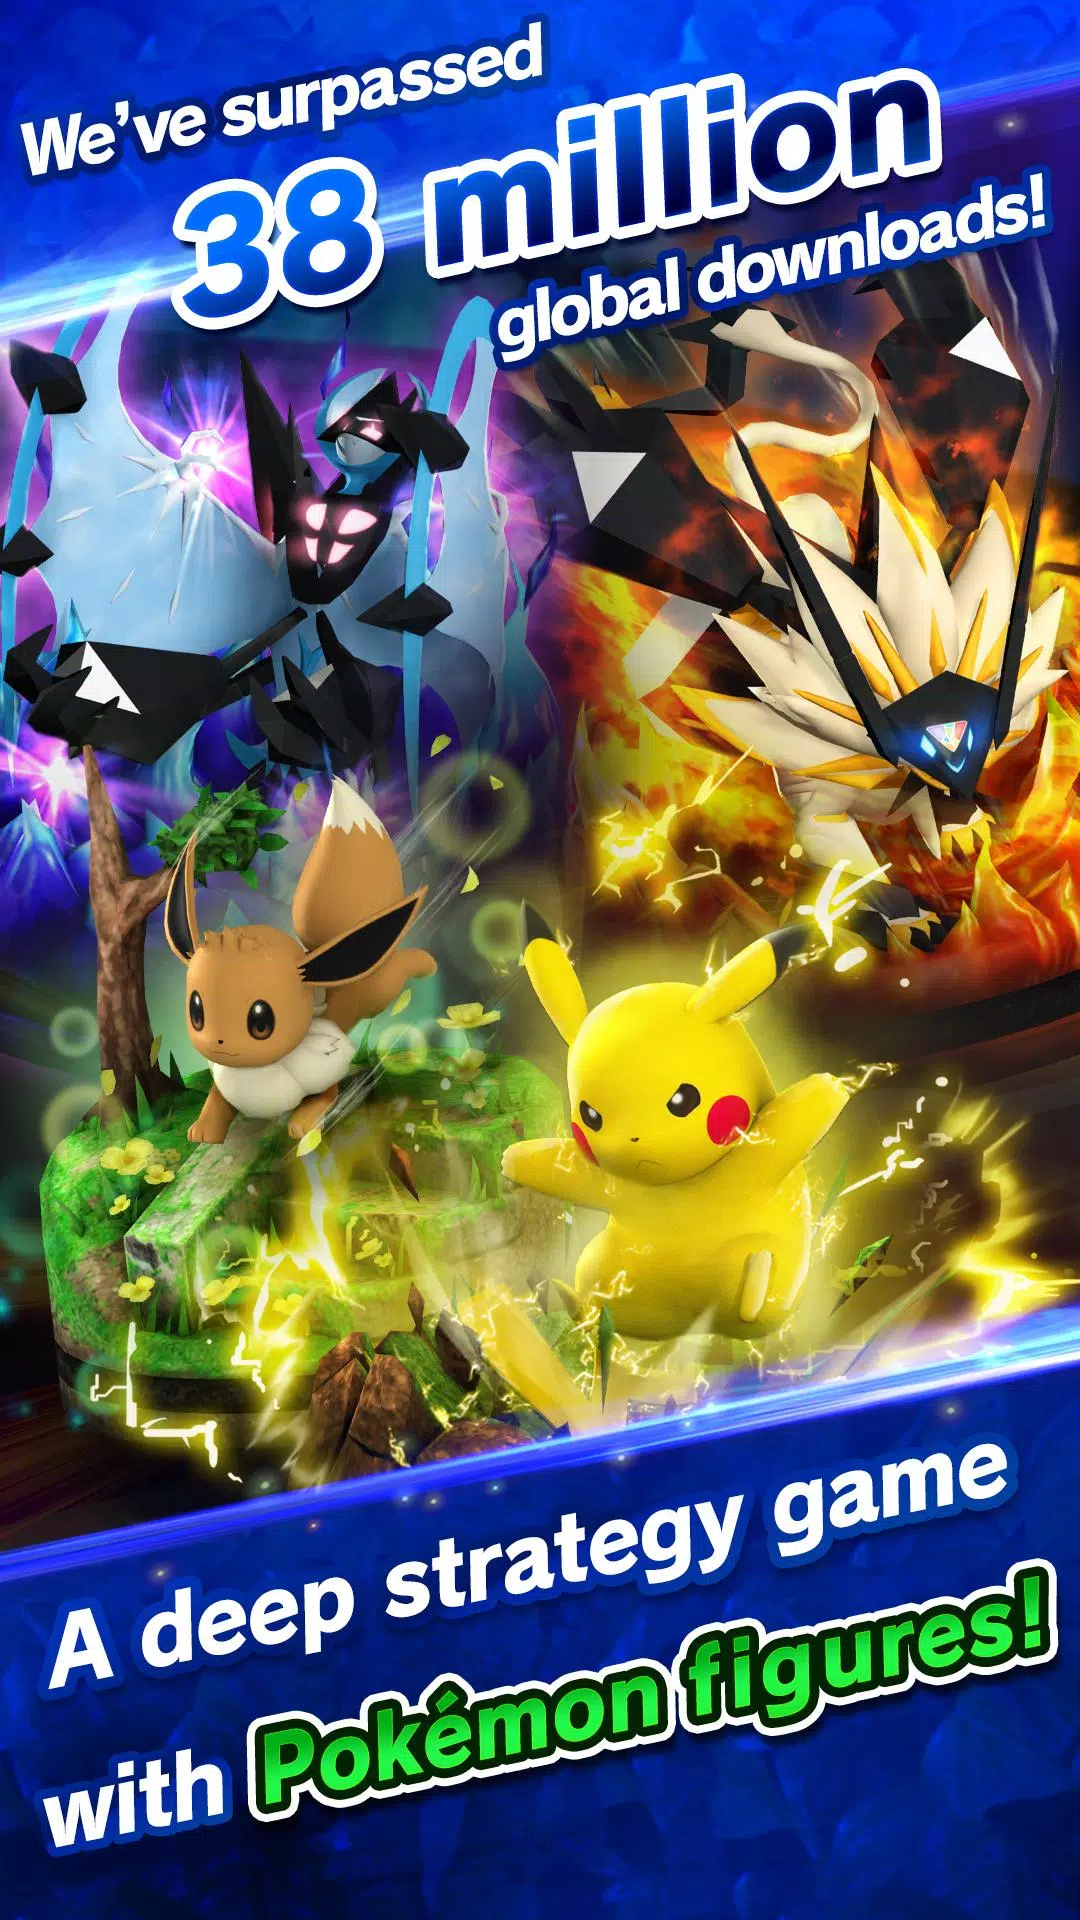 Pokémon Duel para iPhone - Download